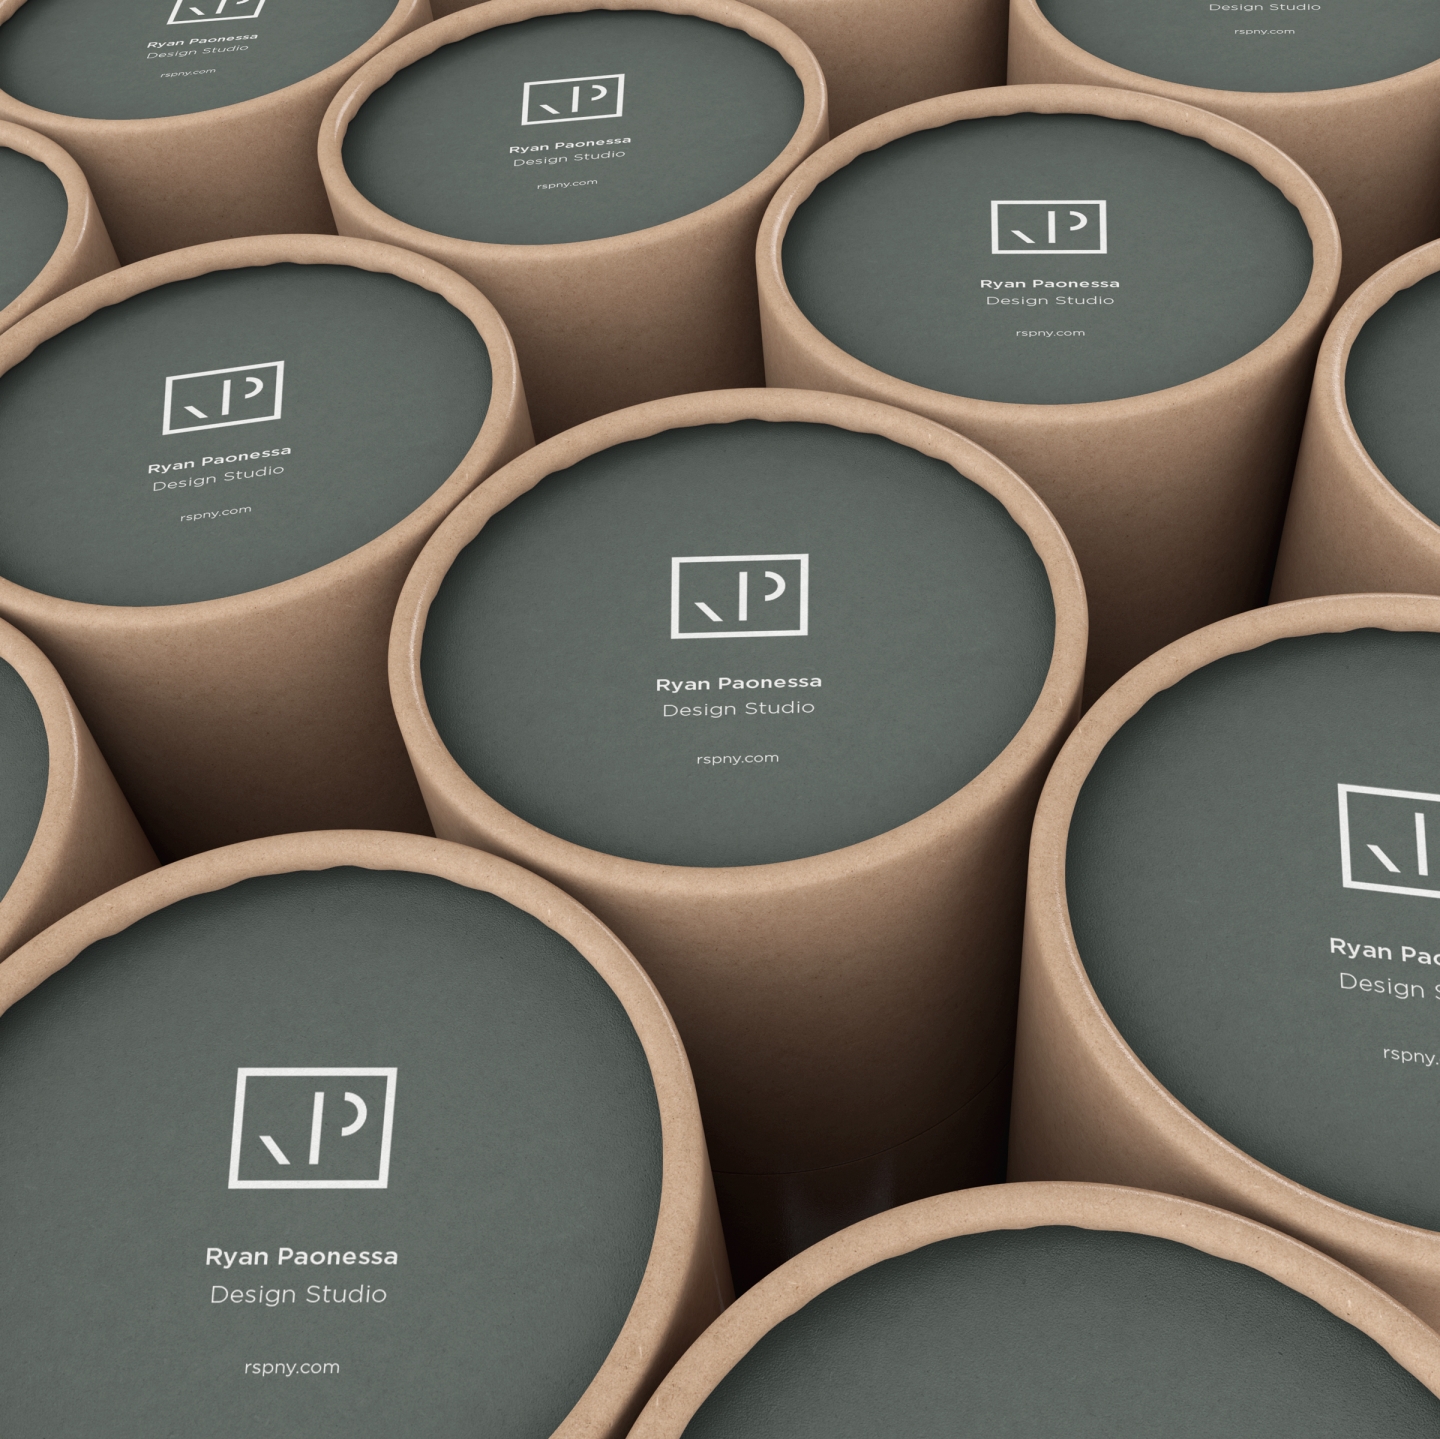 Ryan Paonessa Design Visual Brand Identity – Packaging Paper Tube Design